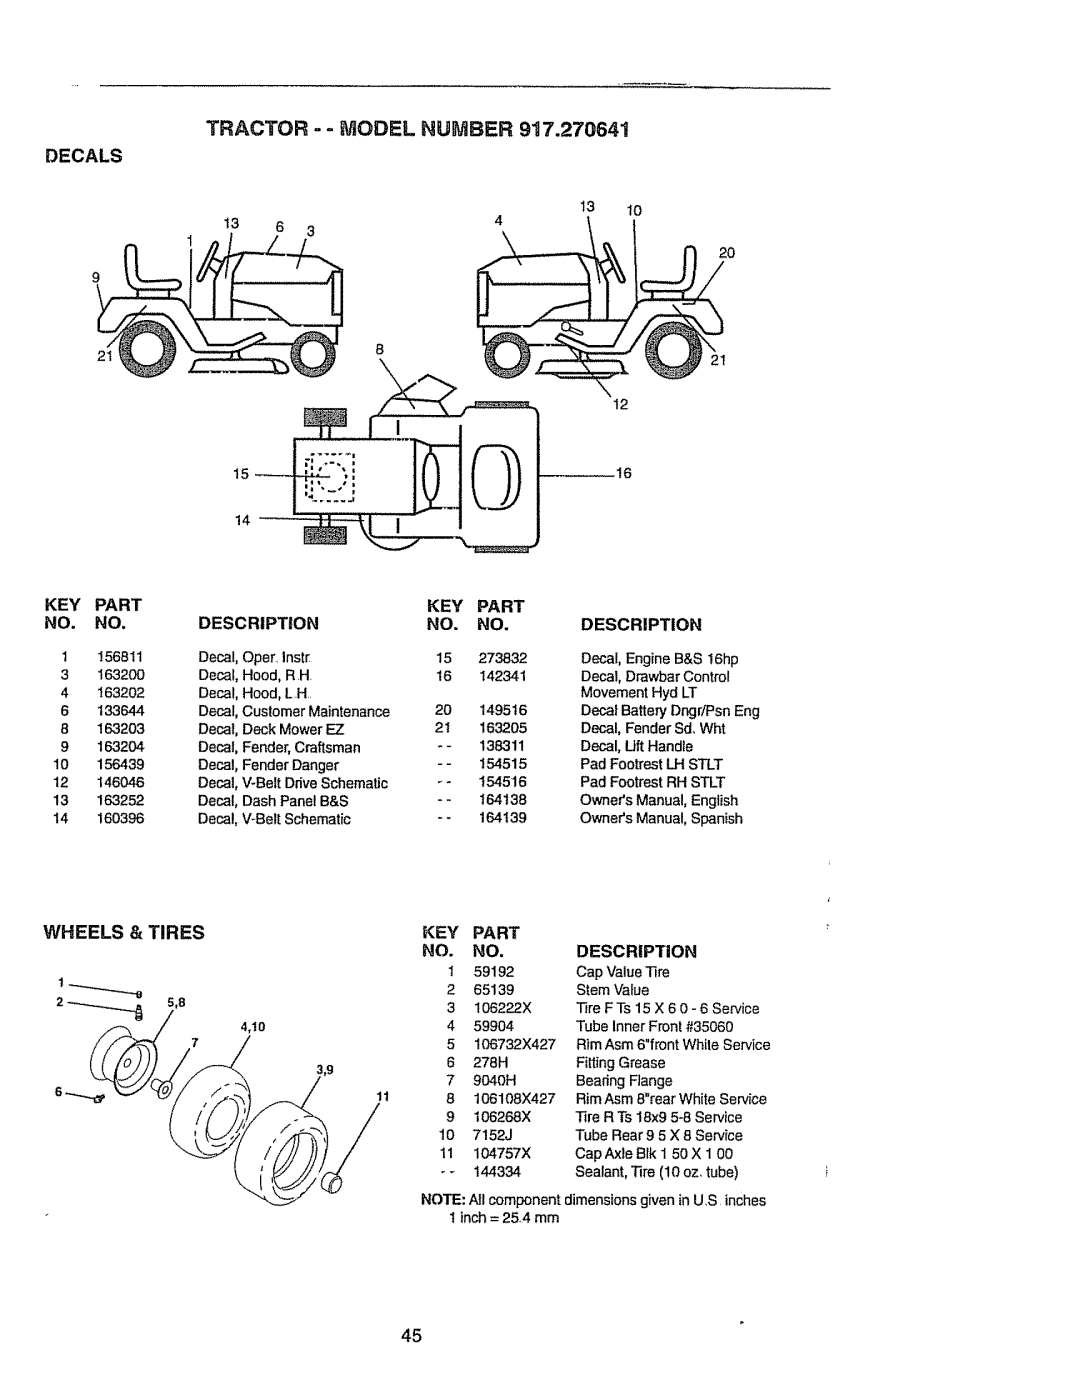 Craftsman 917270841 owner manual Decals, Part, Description, Wheels & Tires 